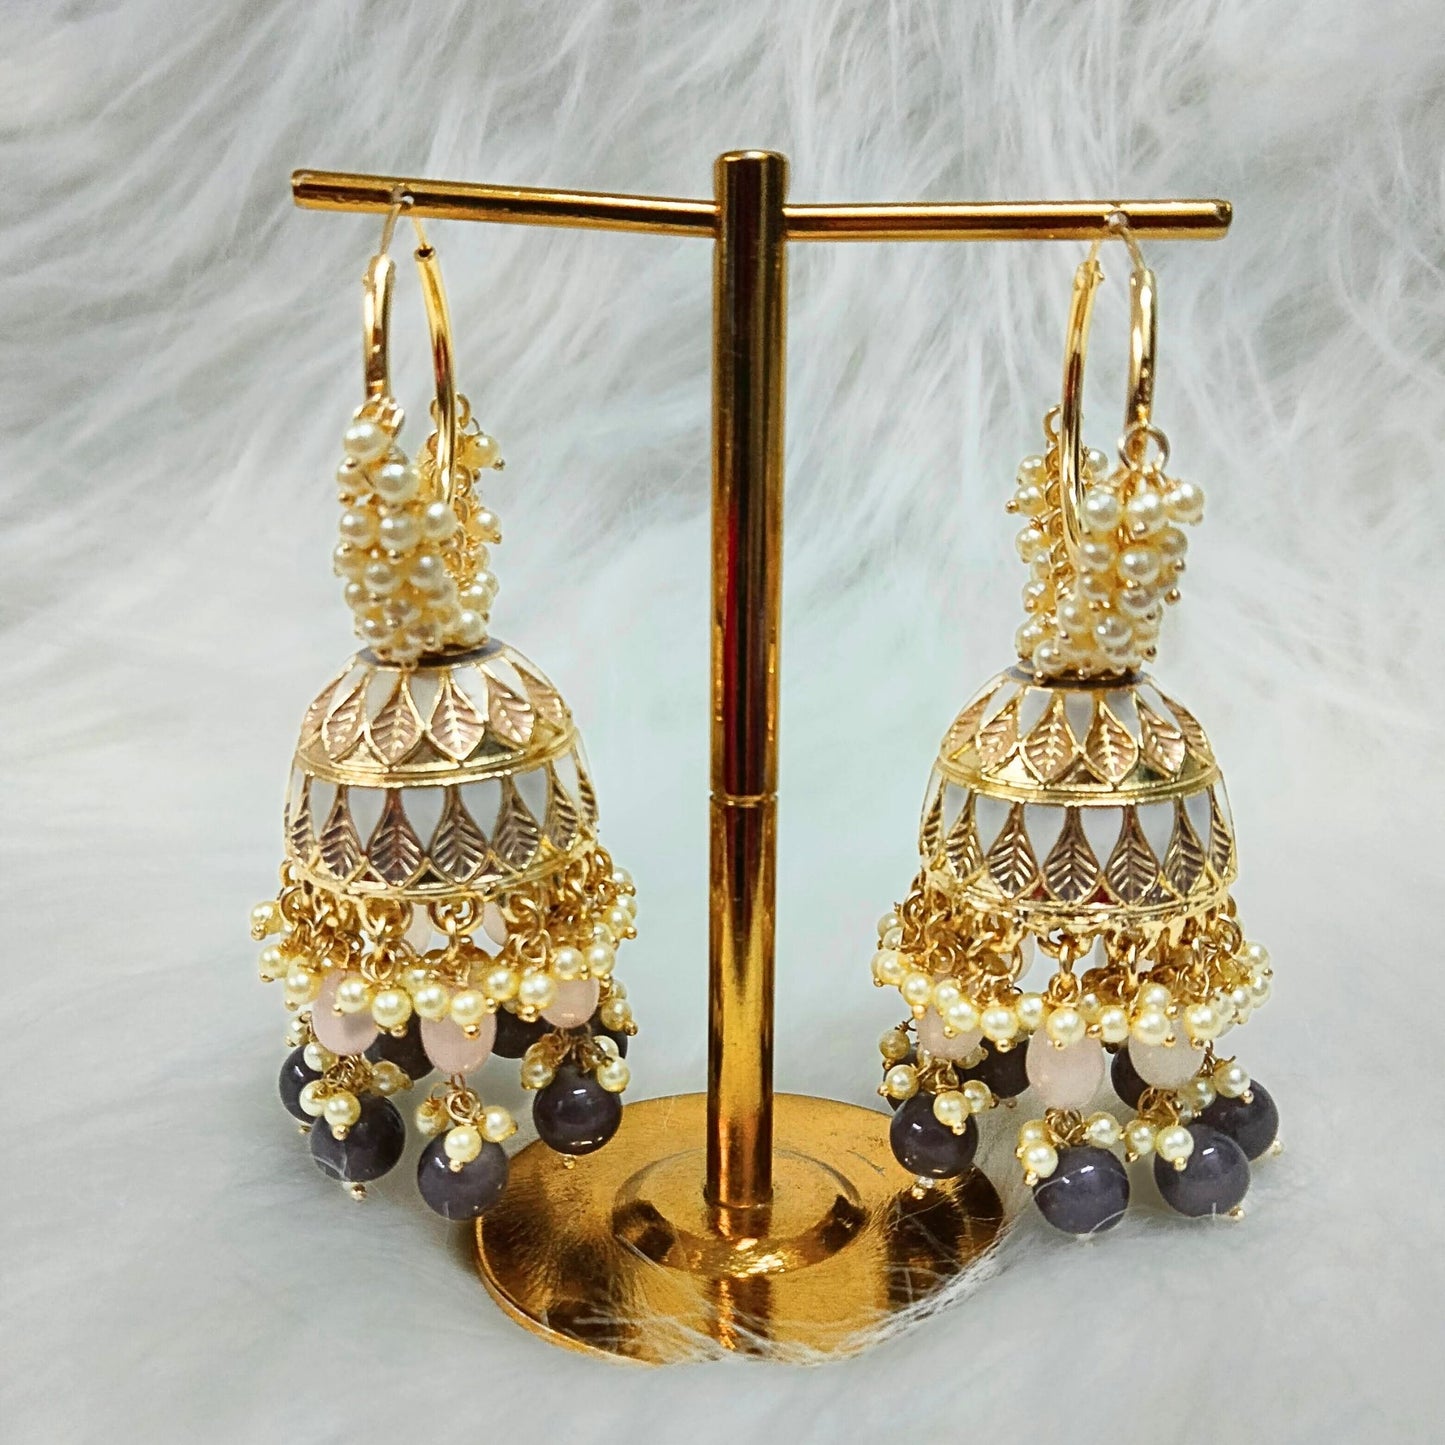 Bdiva 18K Gold Plated Meenakari Enamelled Jhumka Earrings with Semi Cultured Pearls.